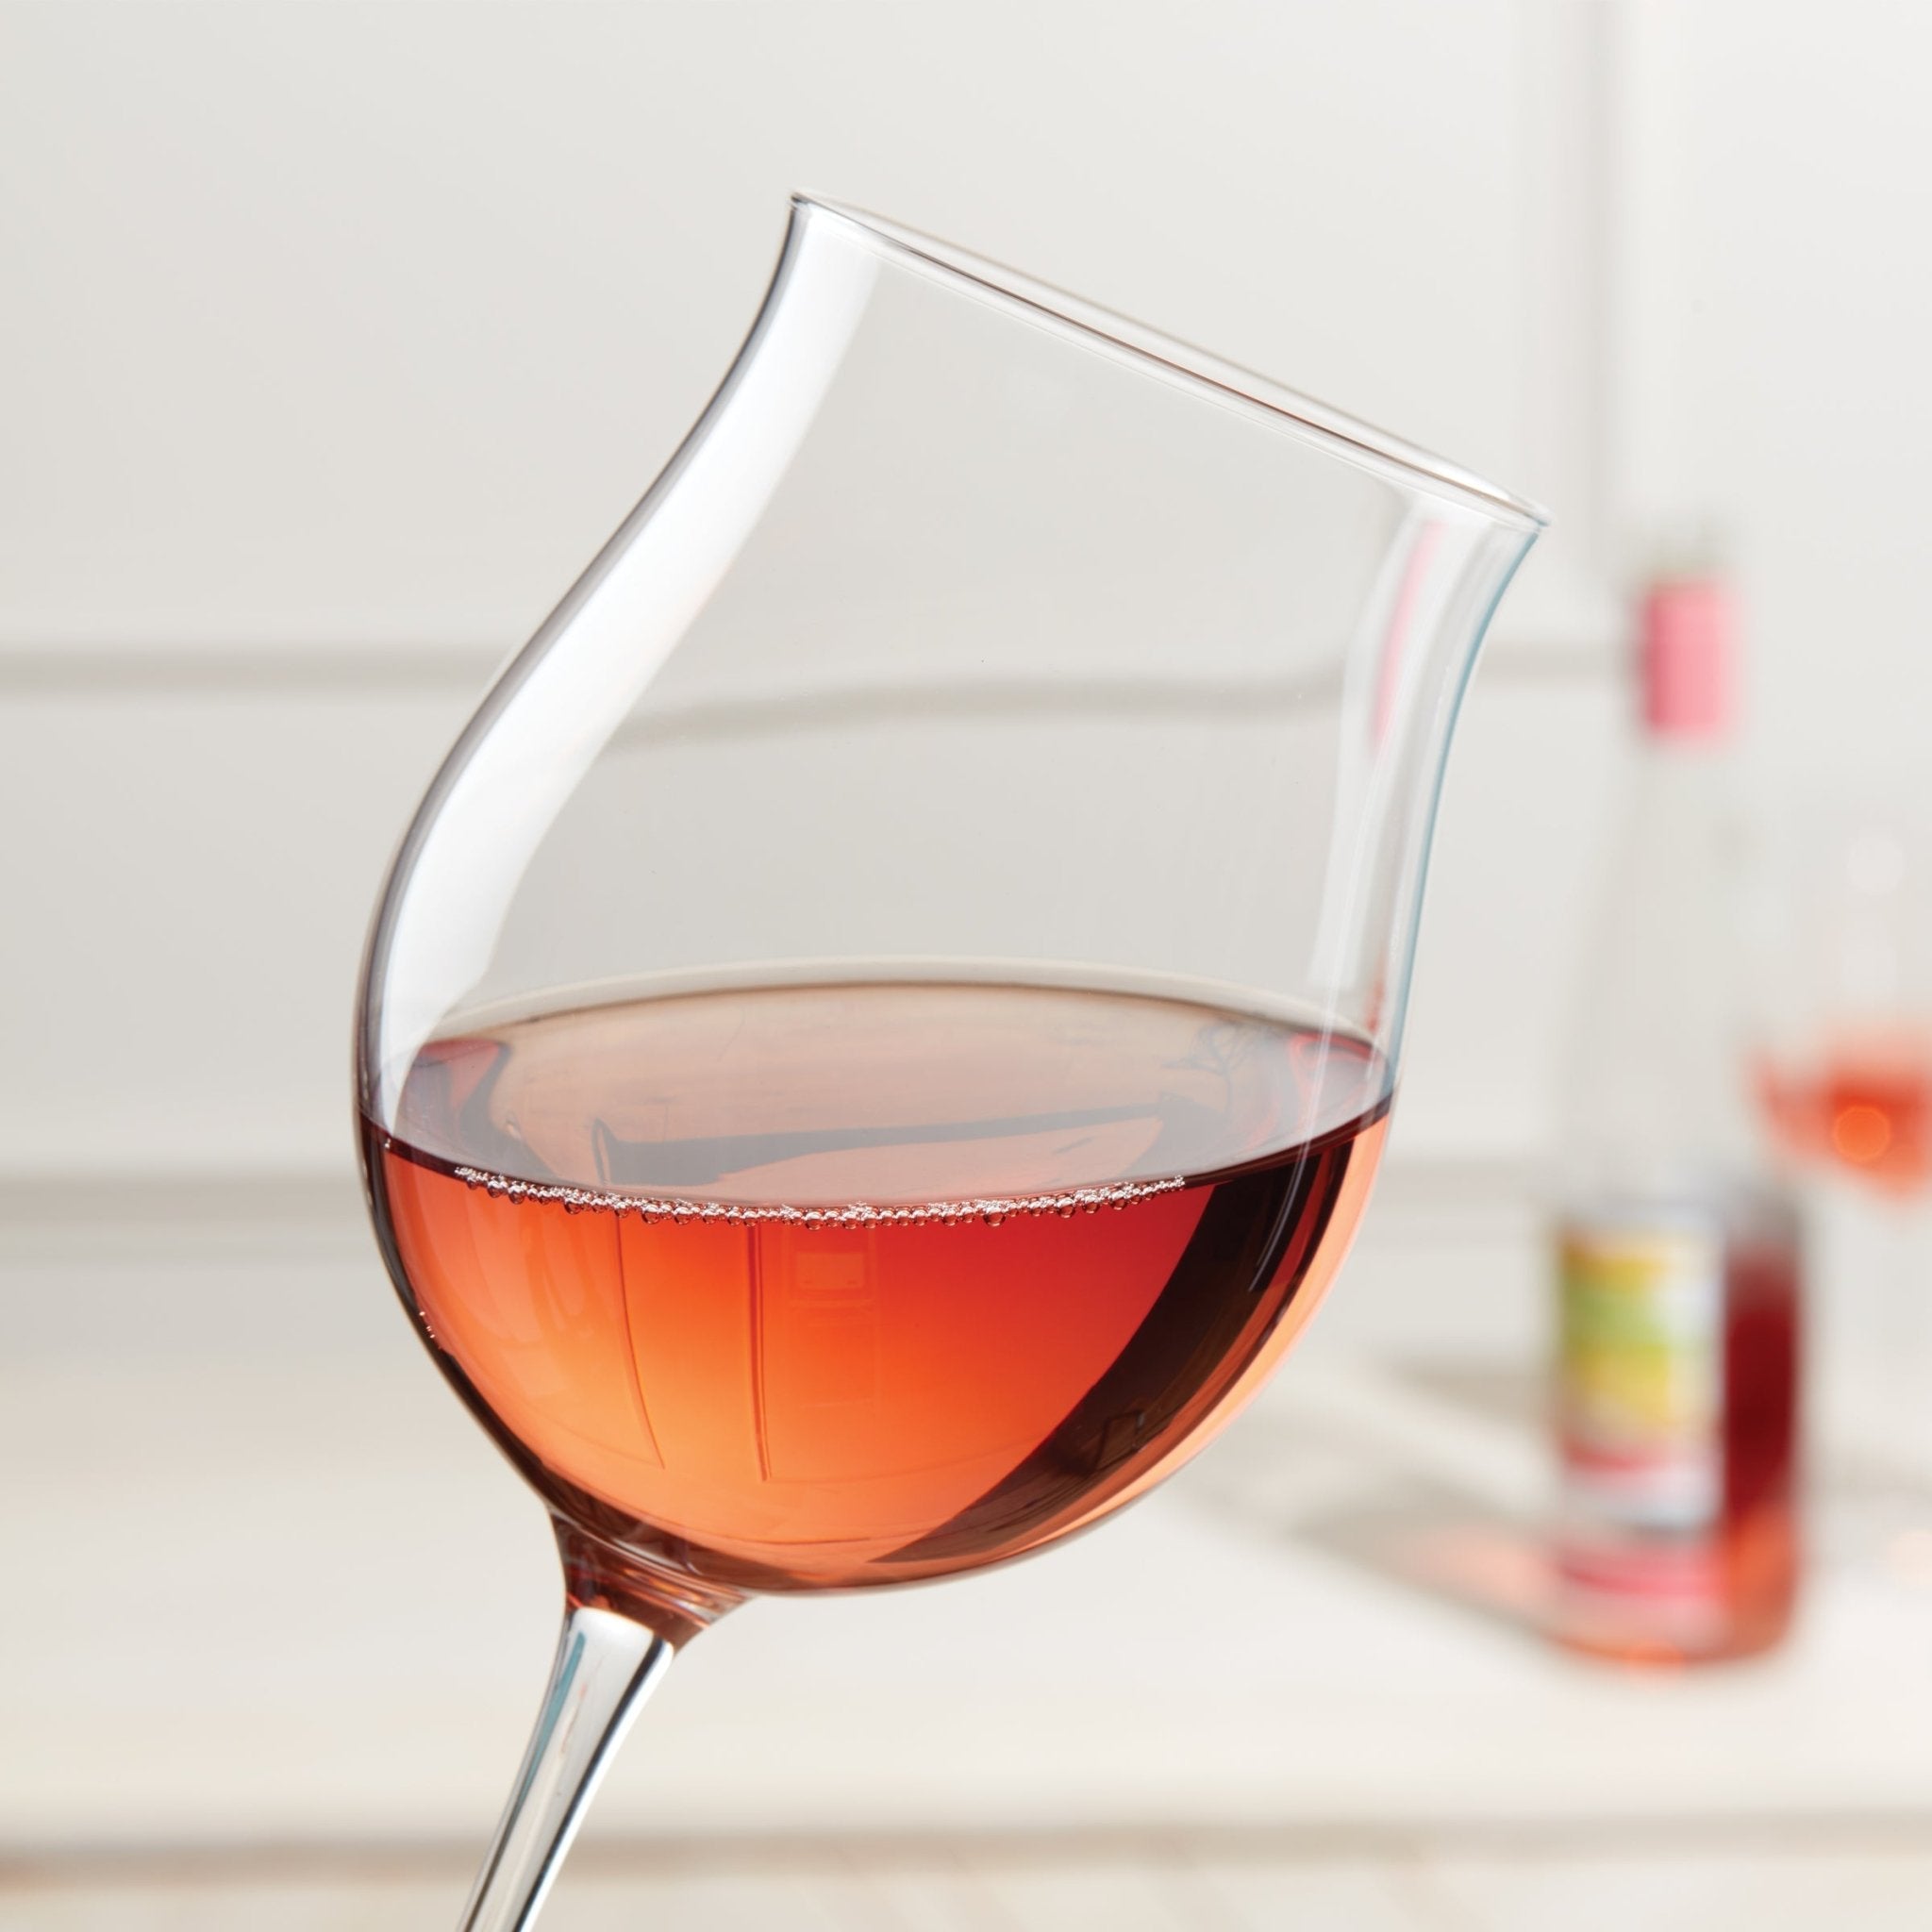 Lenox Tuscany Classics Stackable Wine Glass, Set of 4